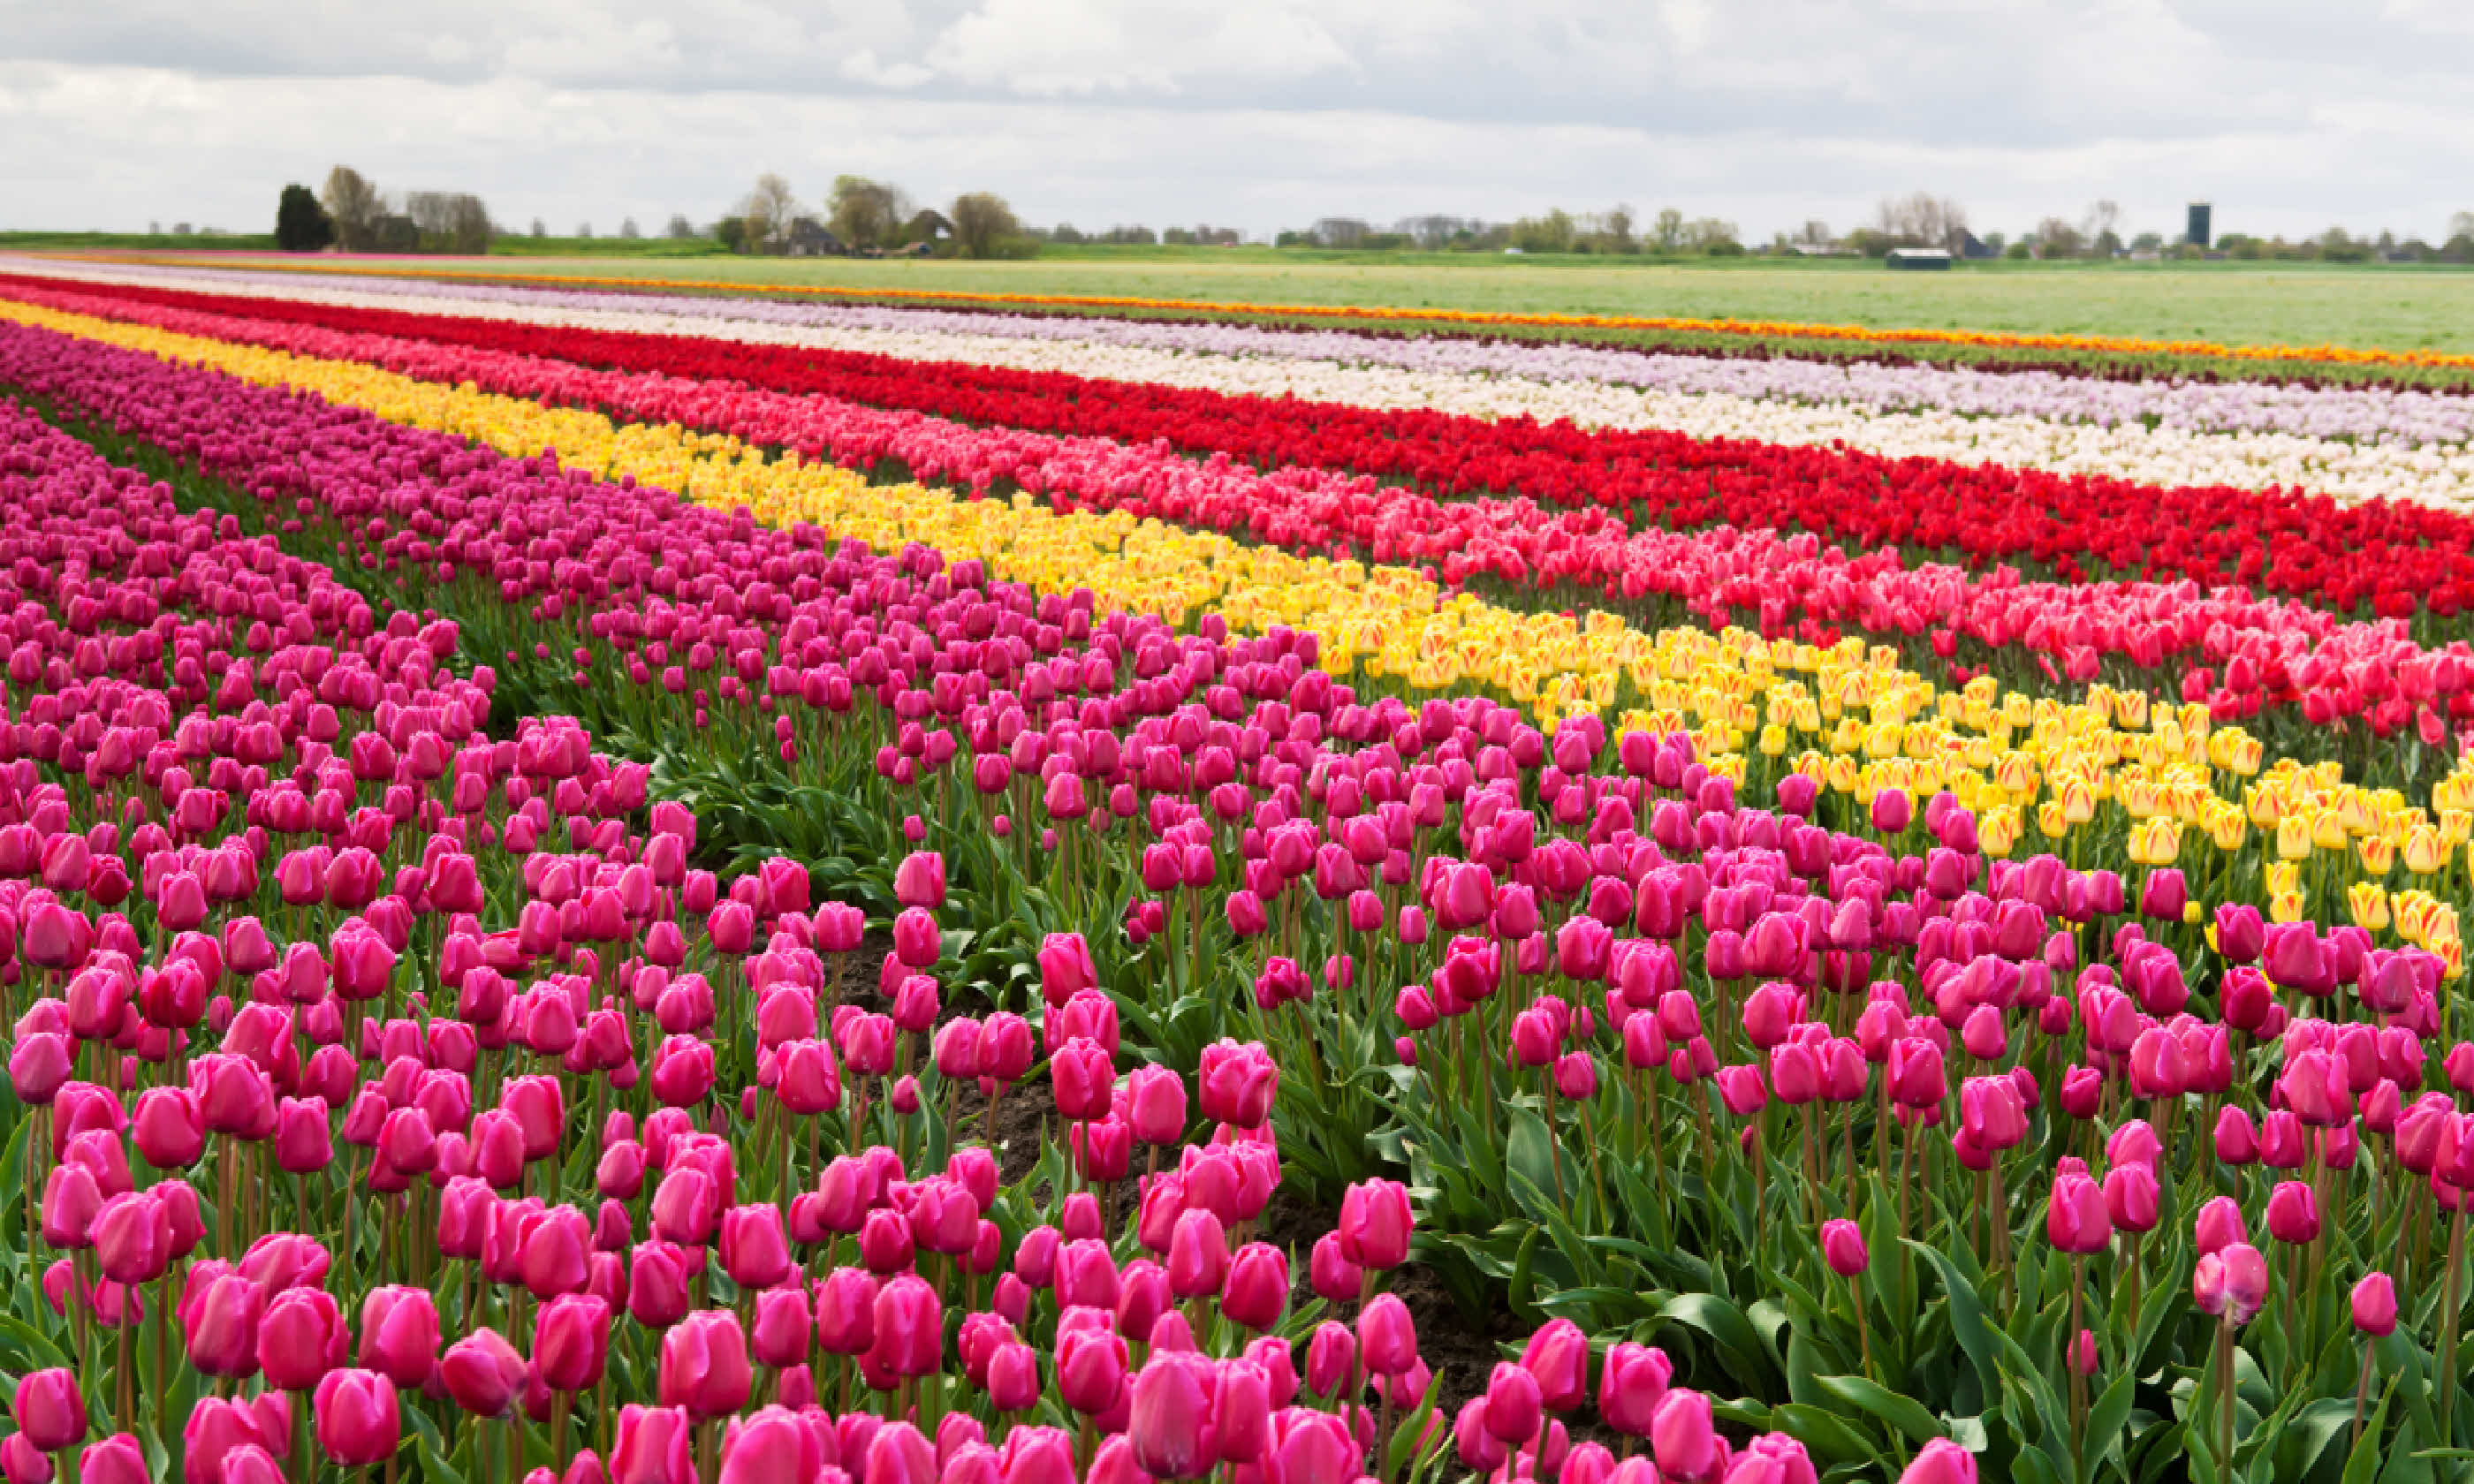 Tulips in the Netherlands (Shutterstock)